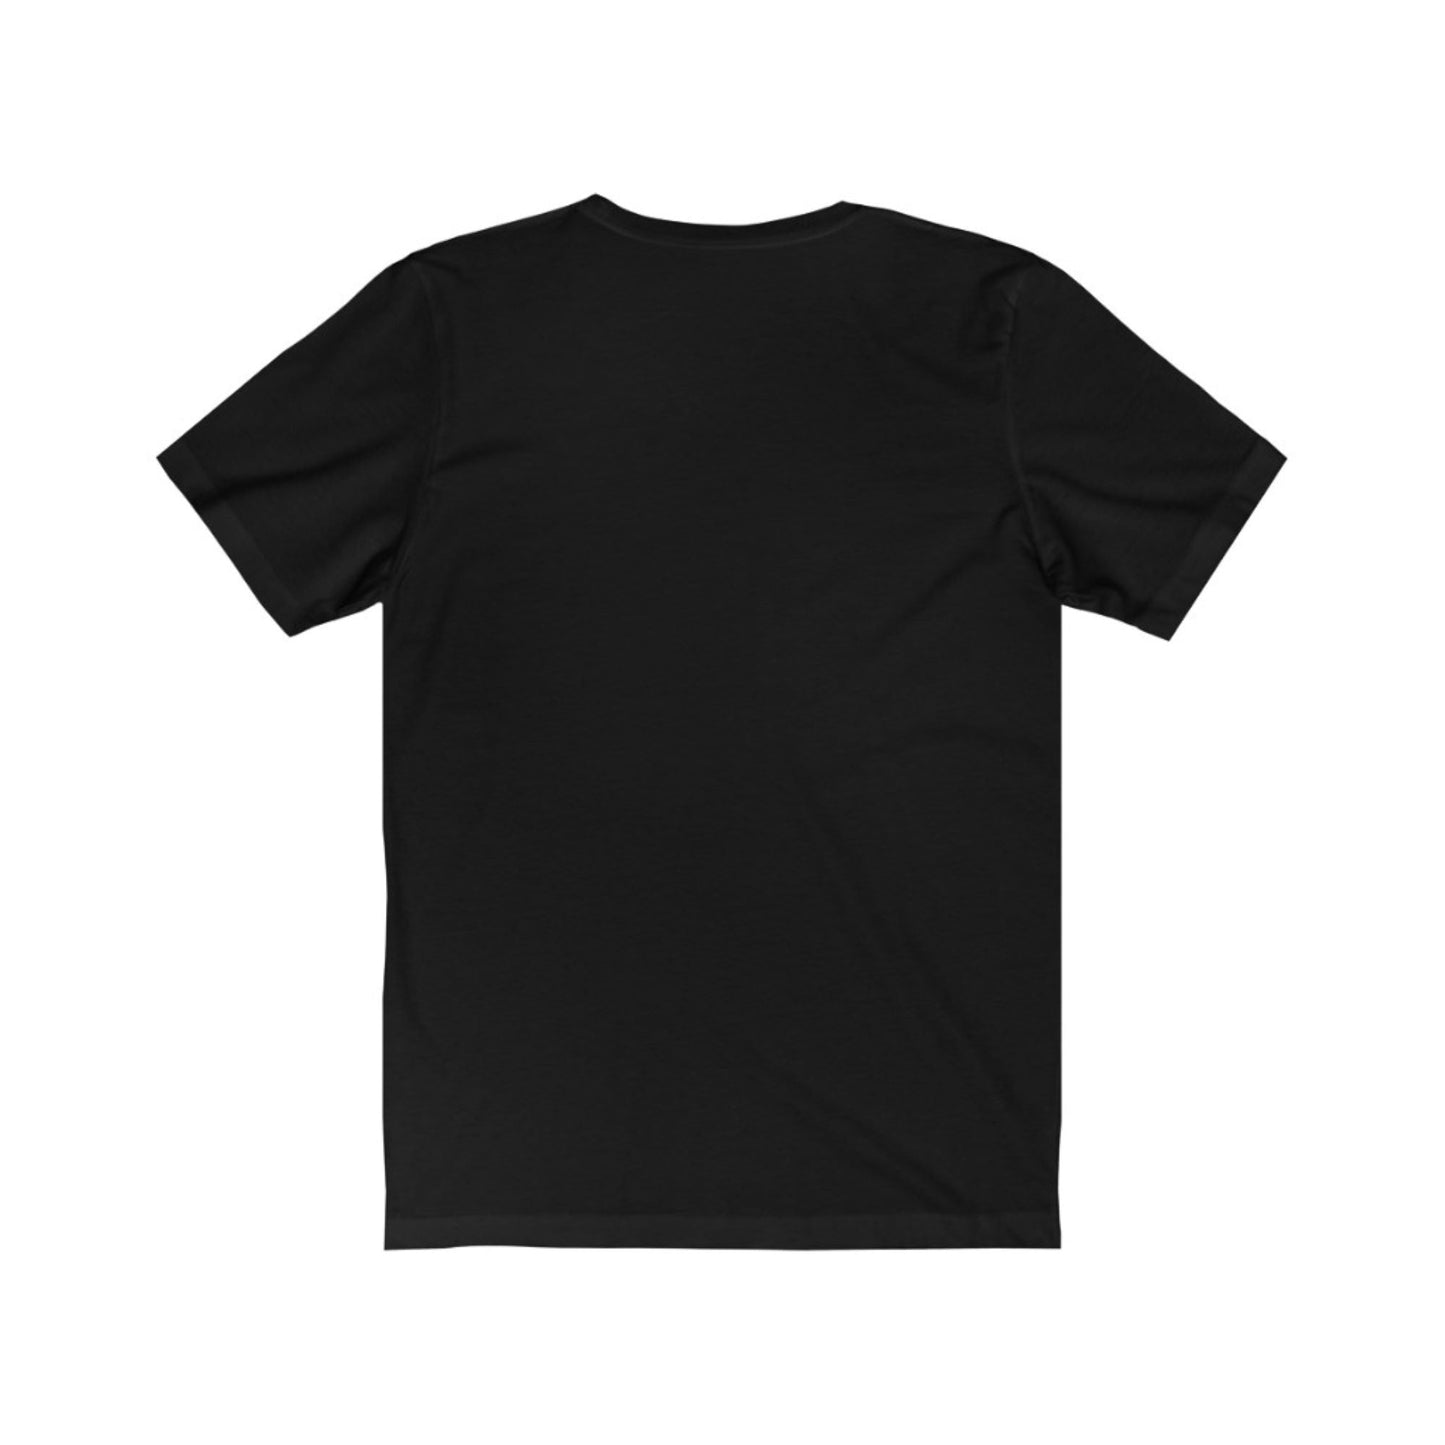 T-Shirt Tshirt Design Gift for Friend and Family Short Sleeved Shirt Geometrical Petrova Designs